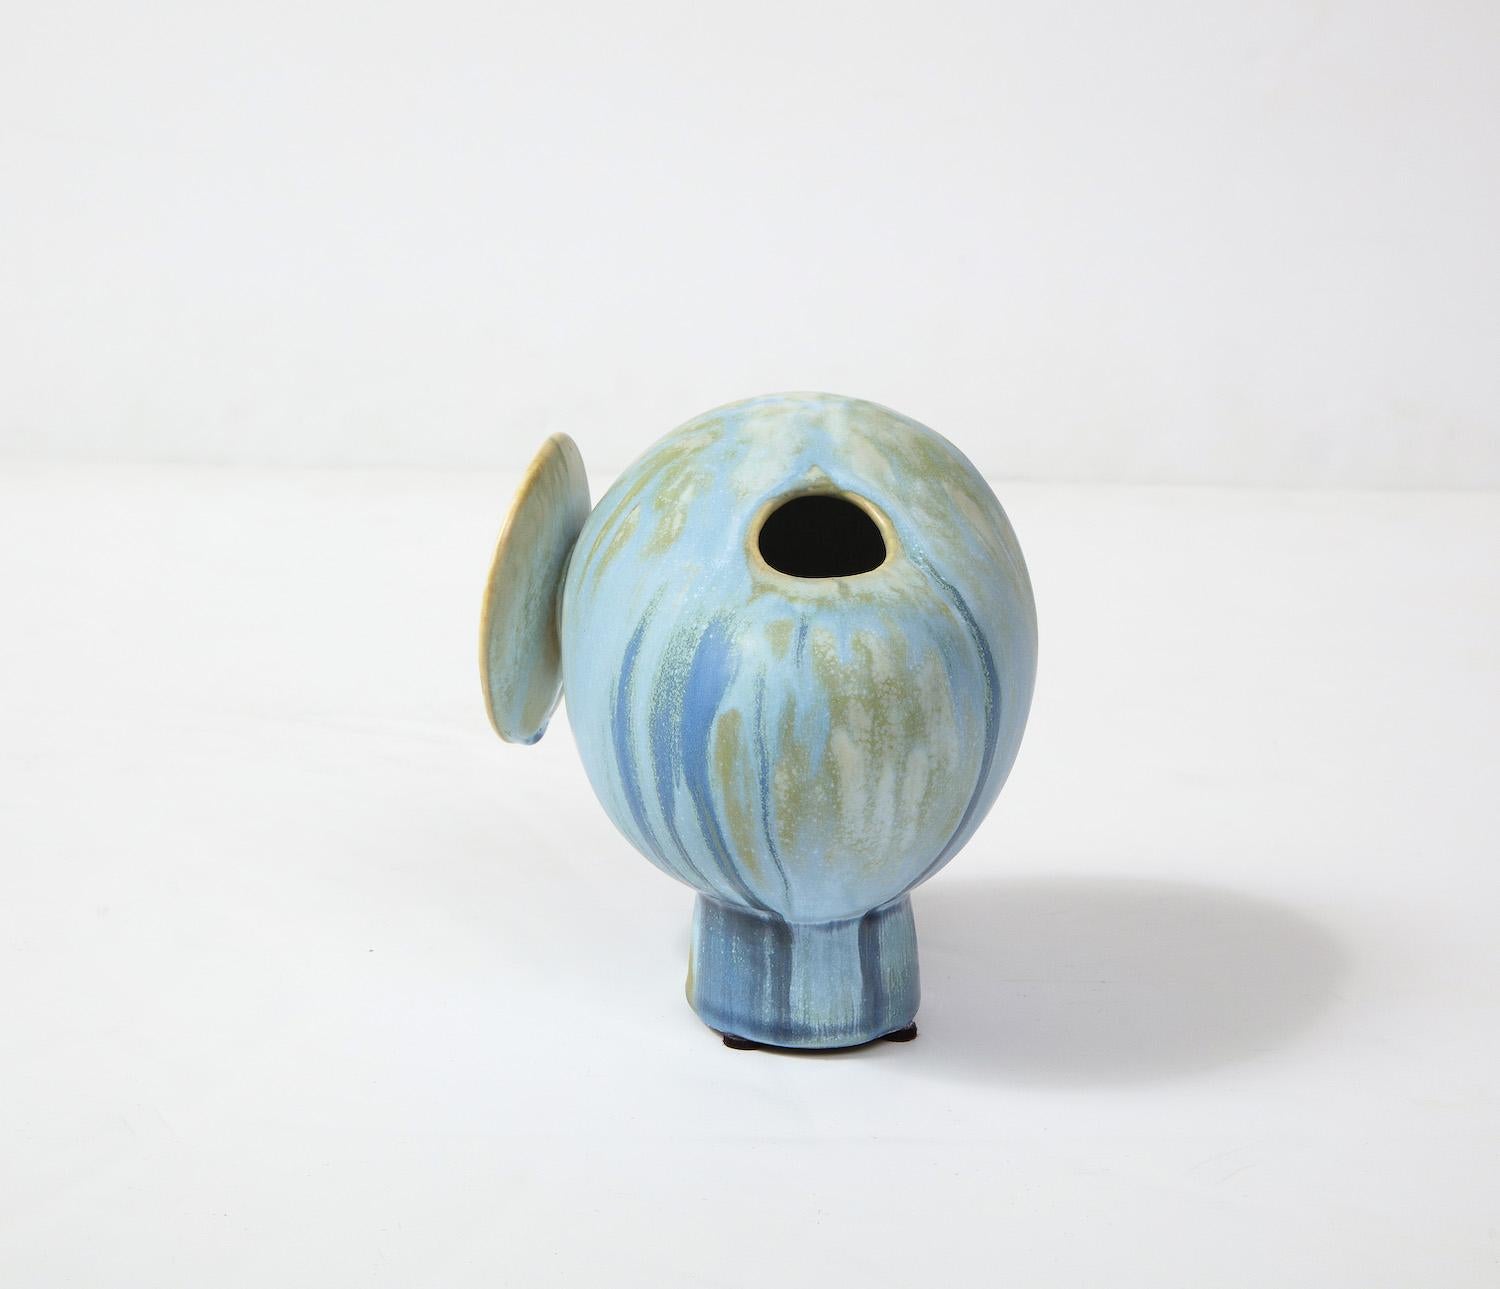 Owl Bud vase #3 by Robbie Heidinger.